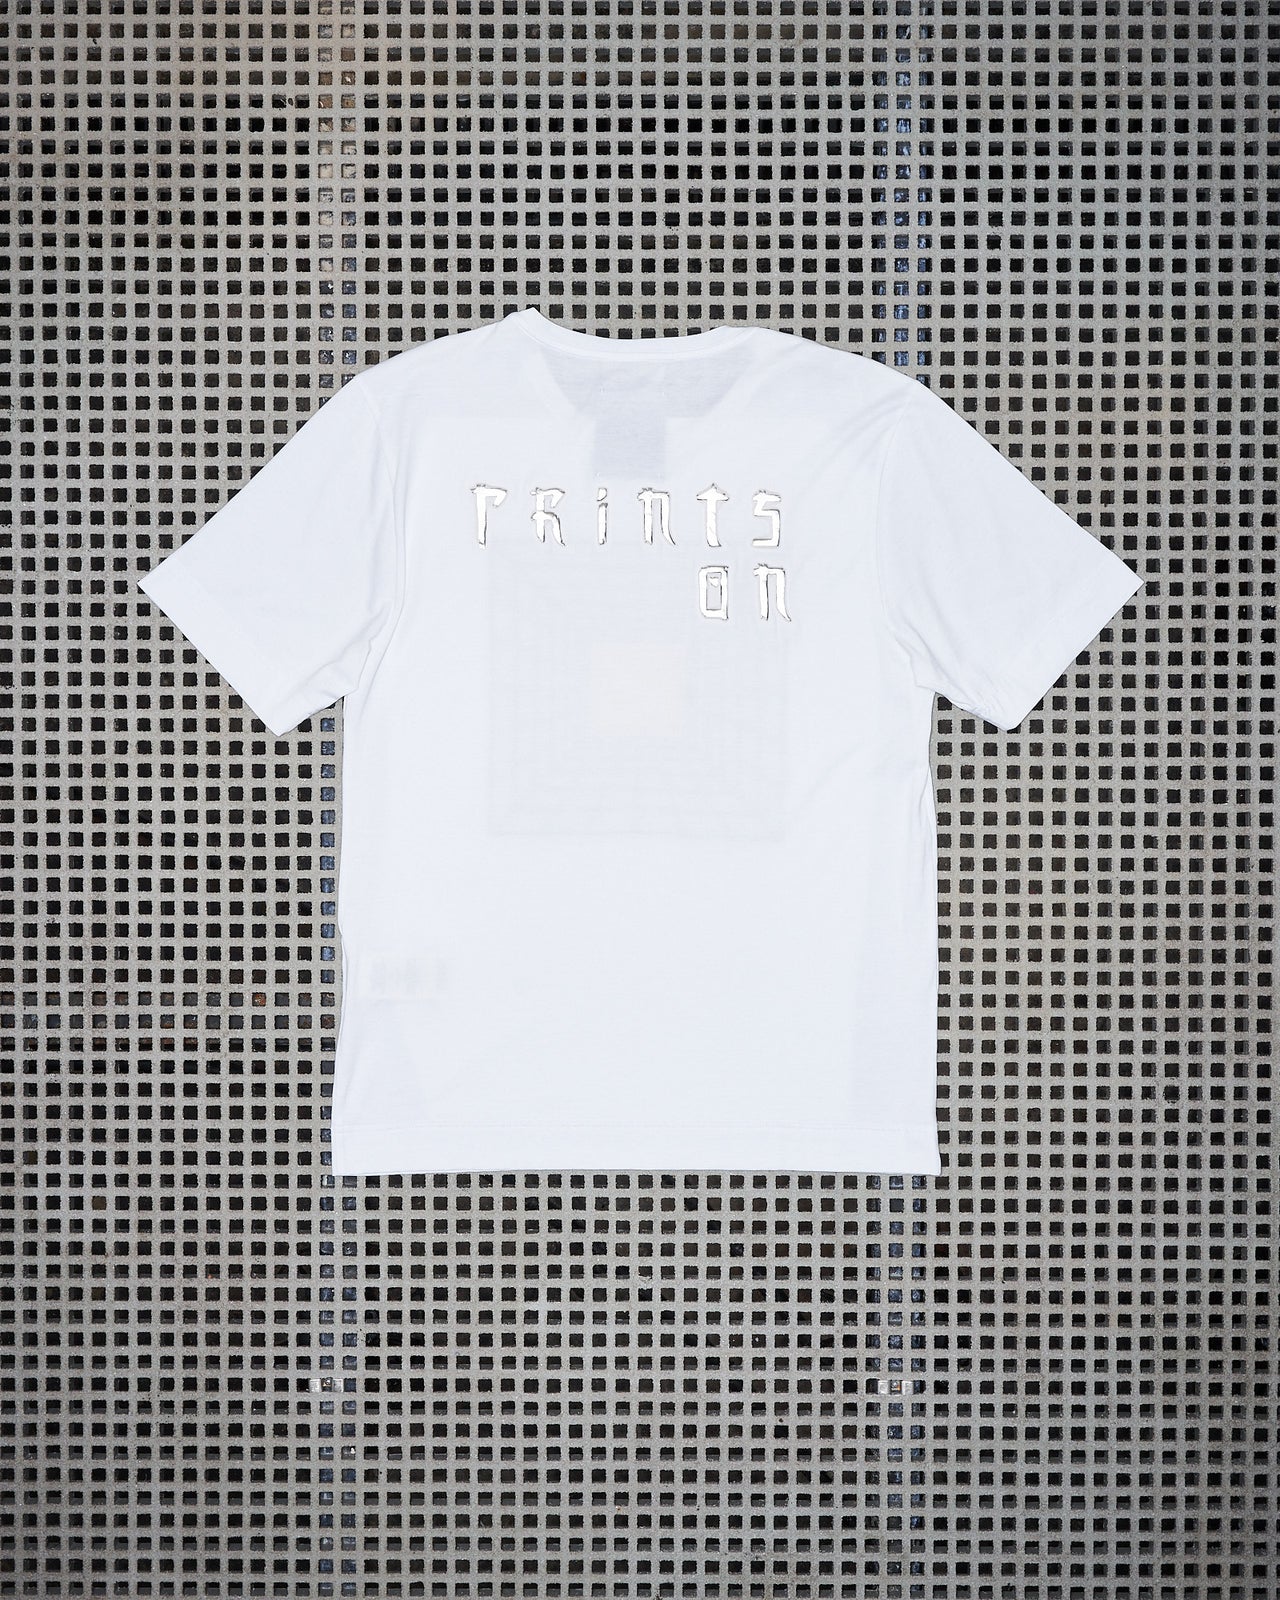 Fendi Prints On logo t-shirt 2020